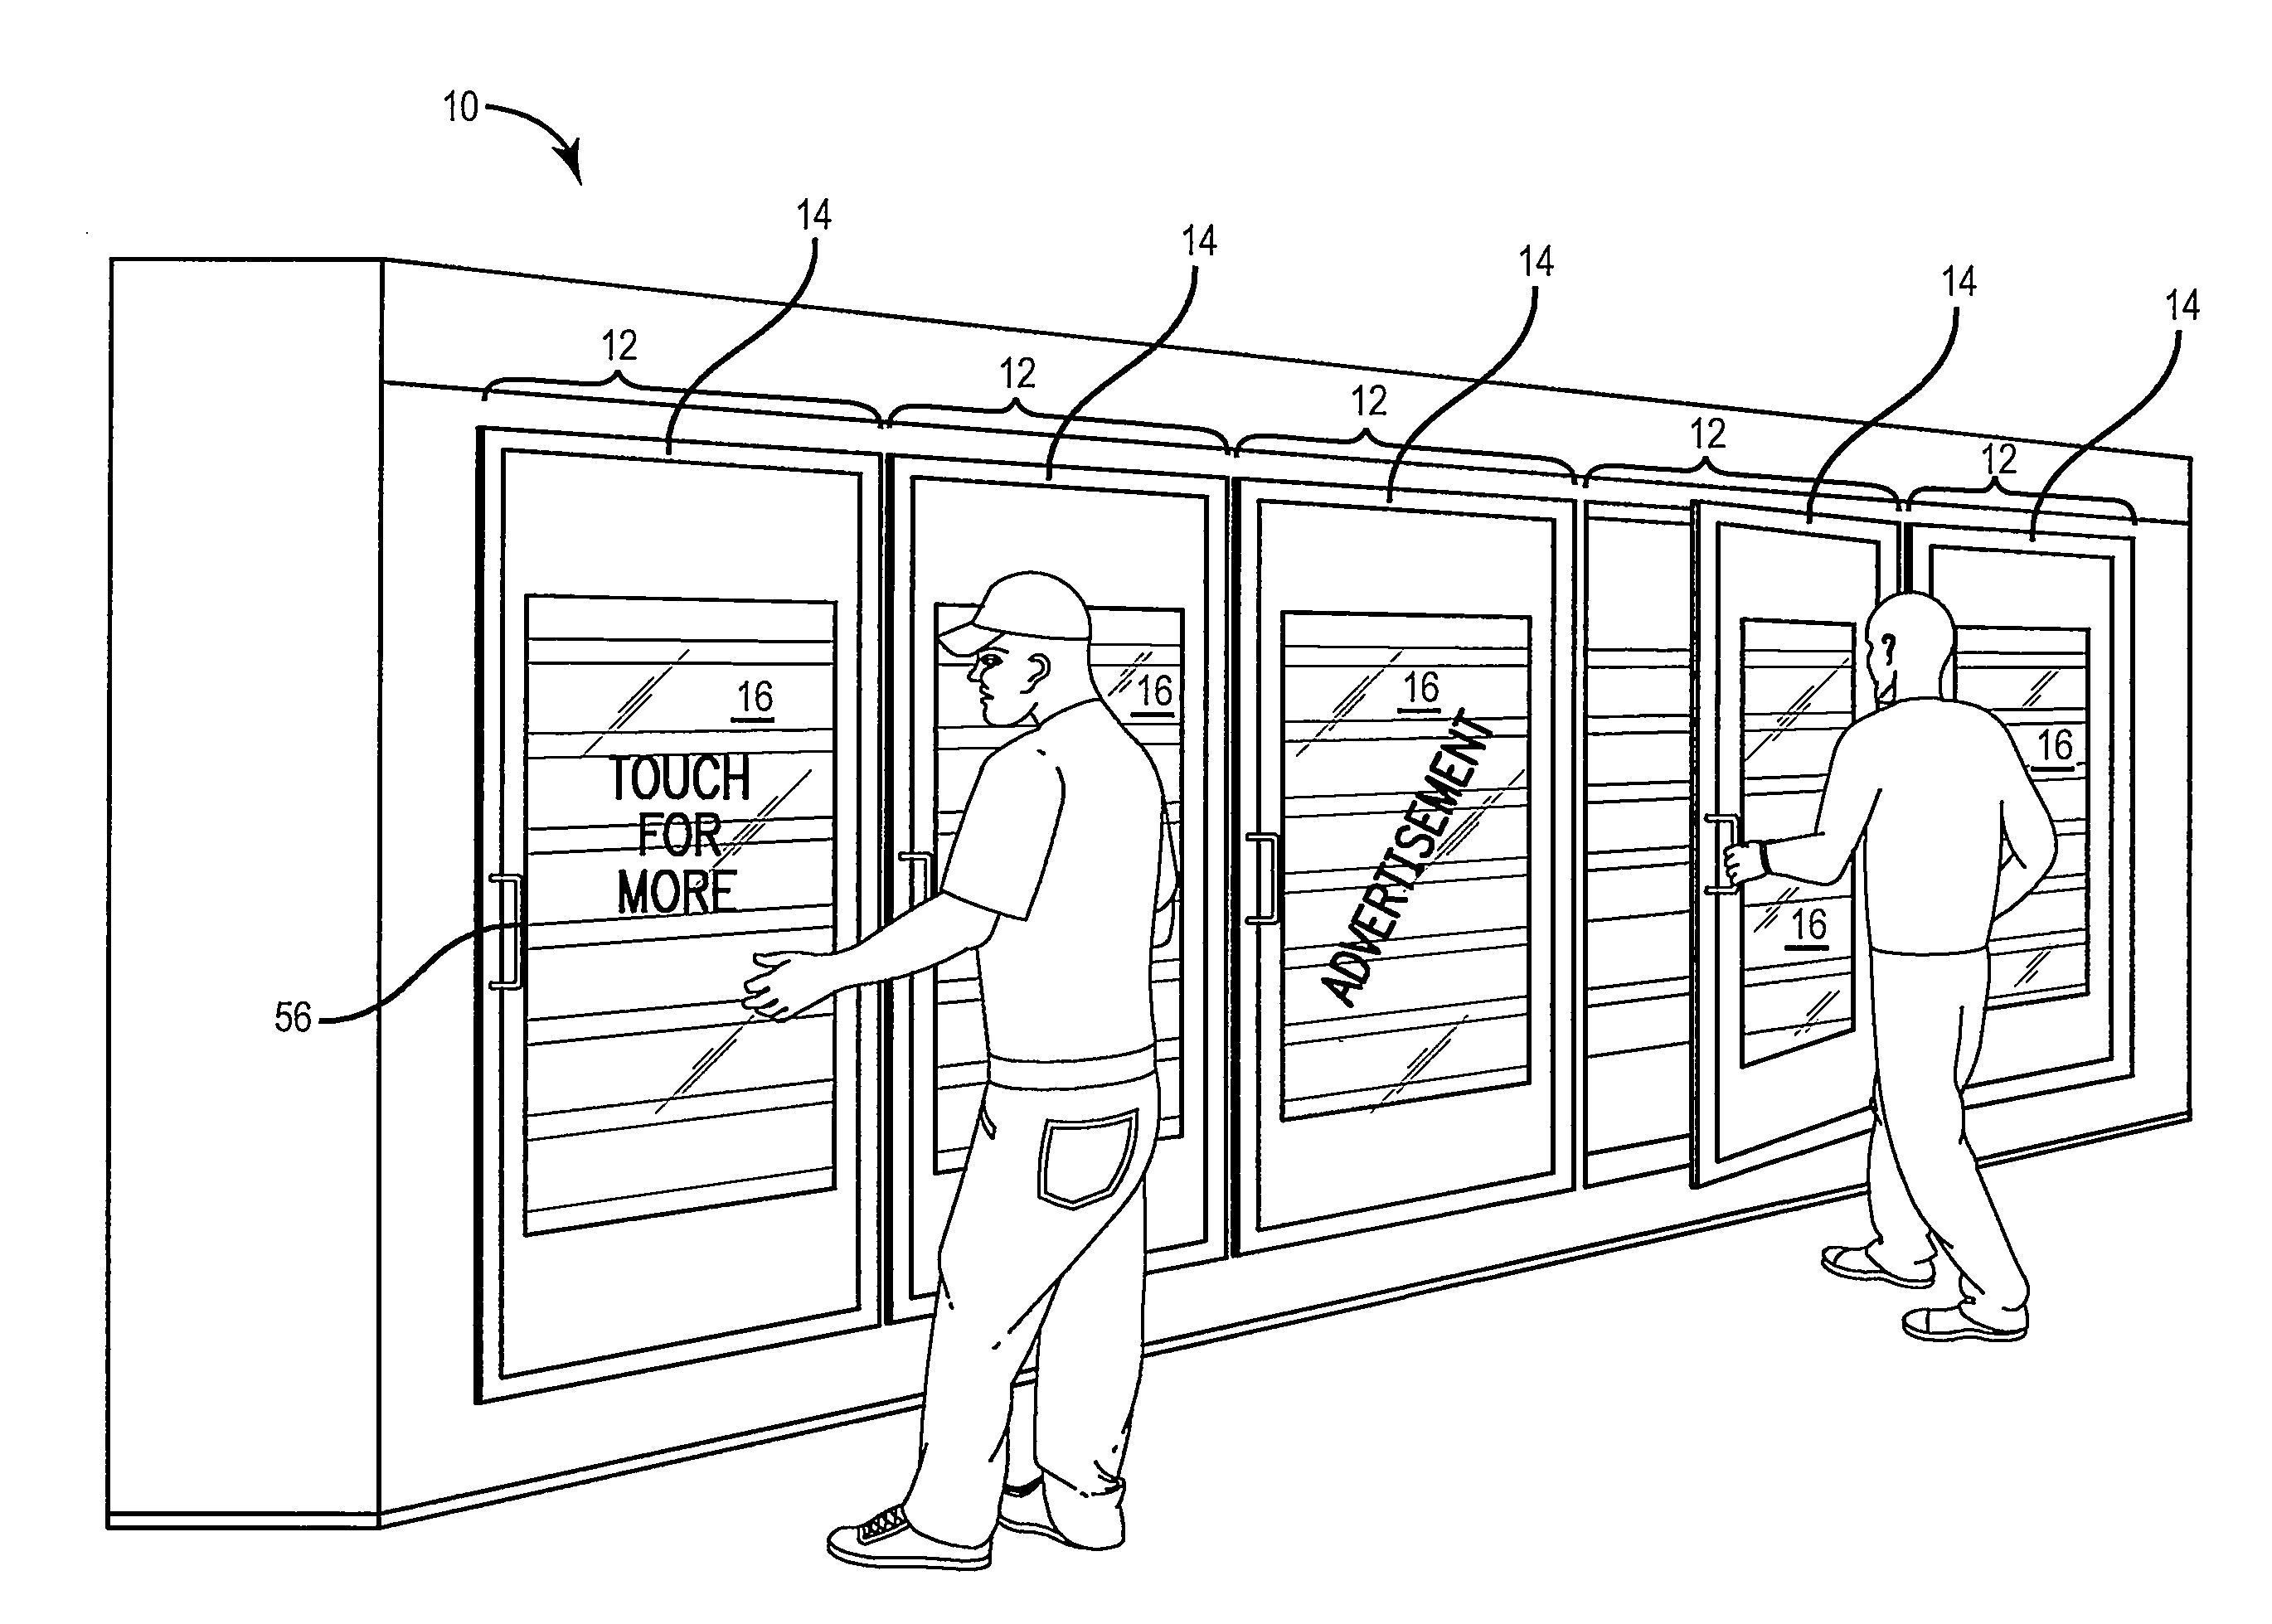 Display case door with transparent LCD panel